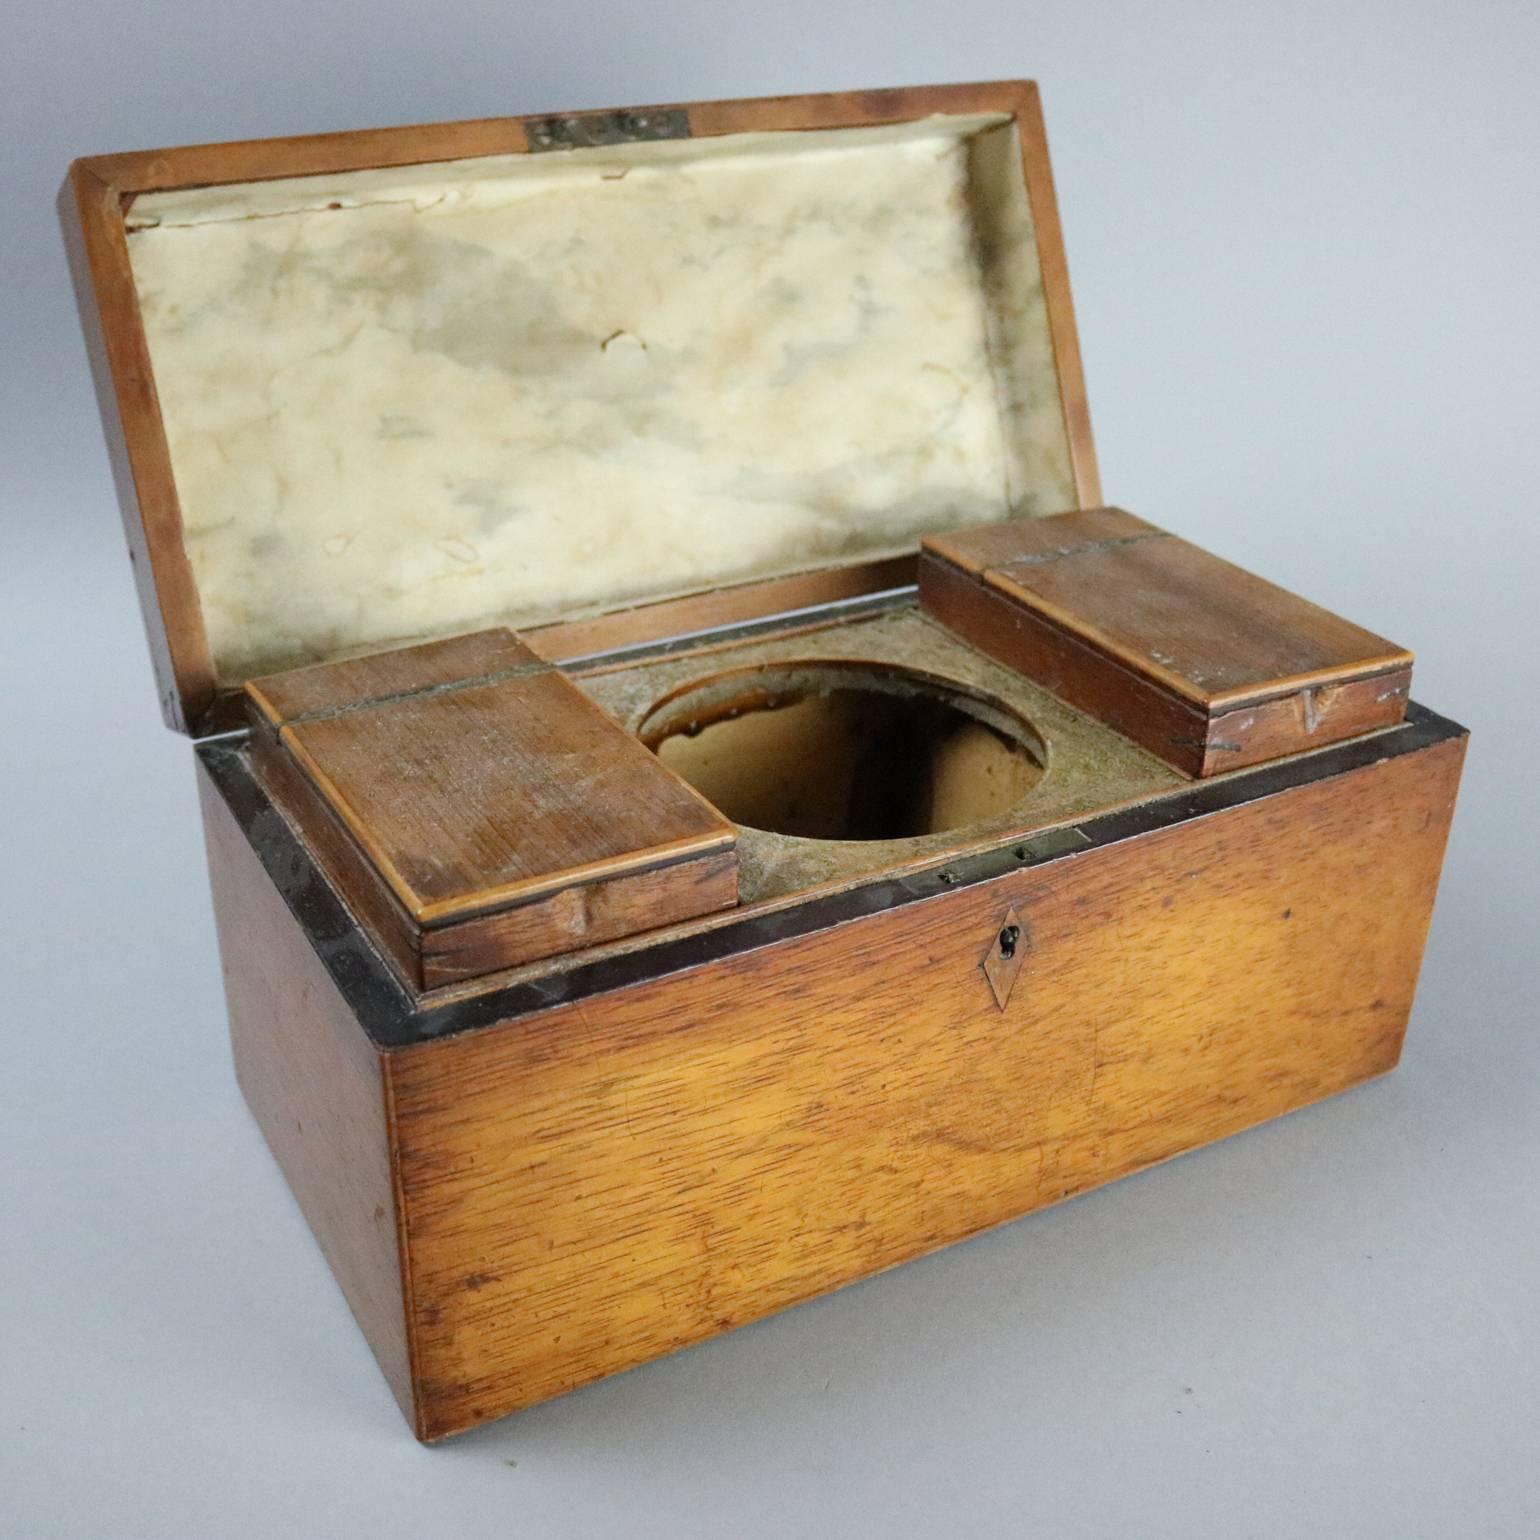 Antique English Georgian mahogany tea caddy features interior tea compartments, central waste compartment, inlaid escutcheon, circa 1870

Measures: 6" H x 12" W x 6" D.